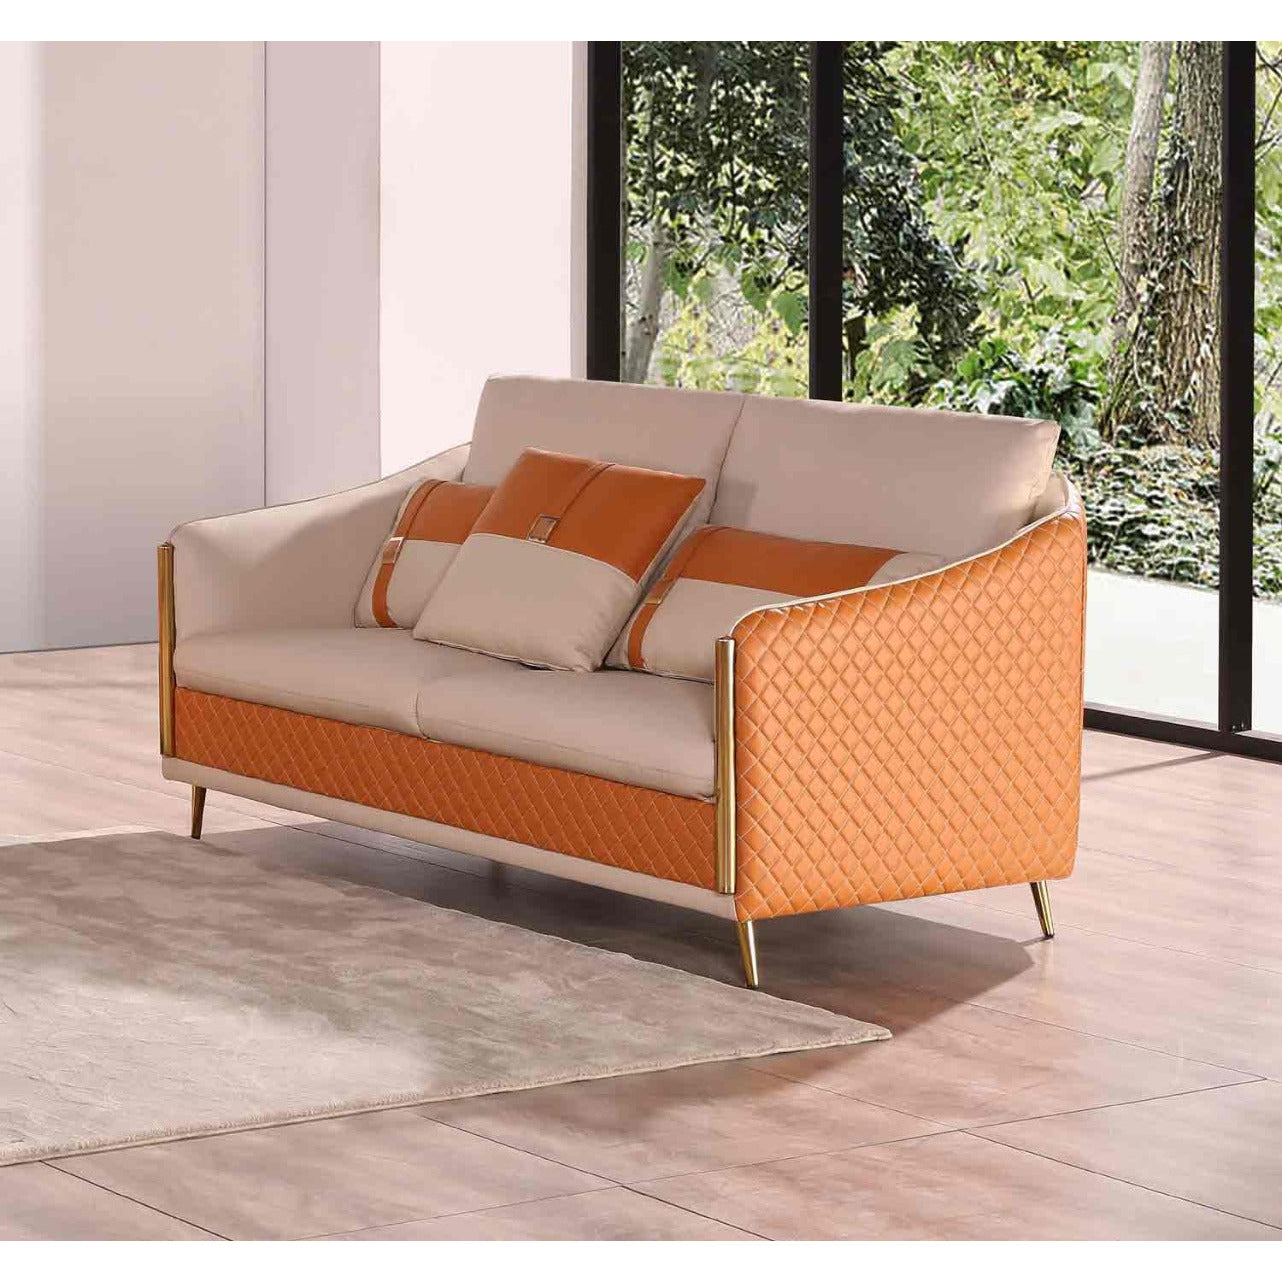 European Furniture - Icaro 2 Piece Living Room Set in Off White-Orange - 64455-2SET - New Star Living